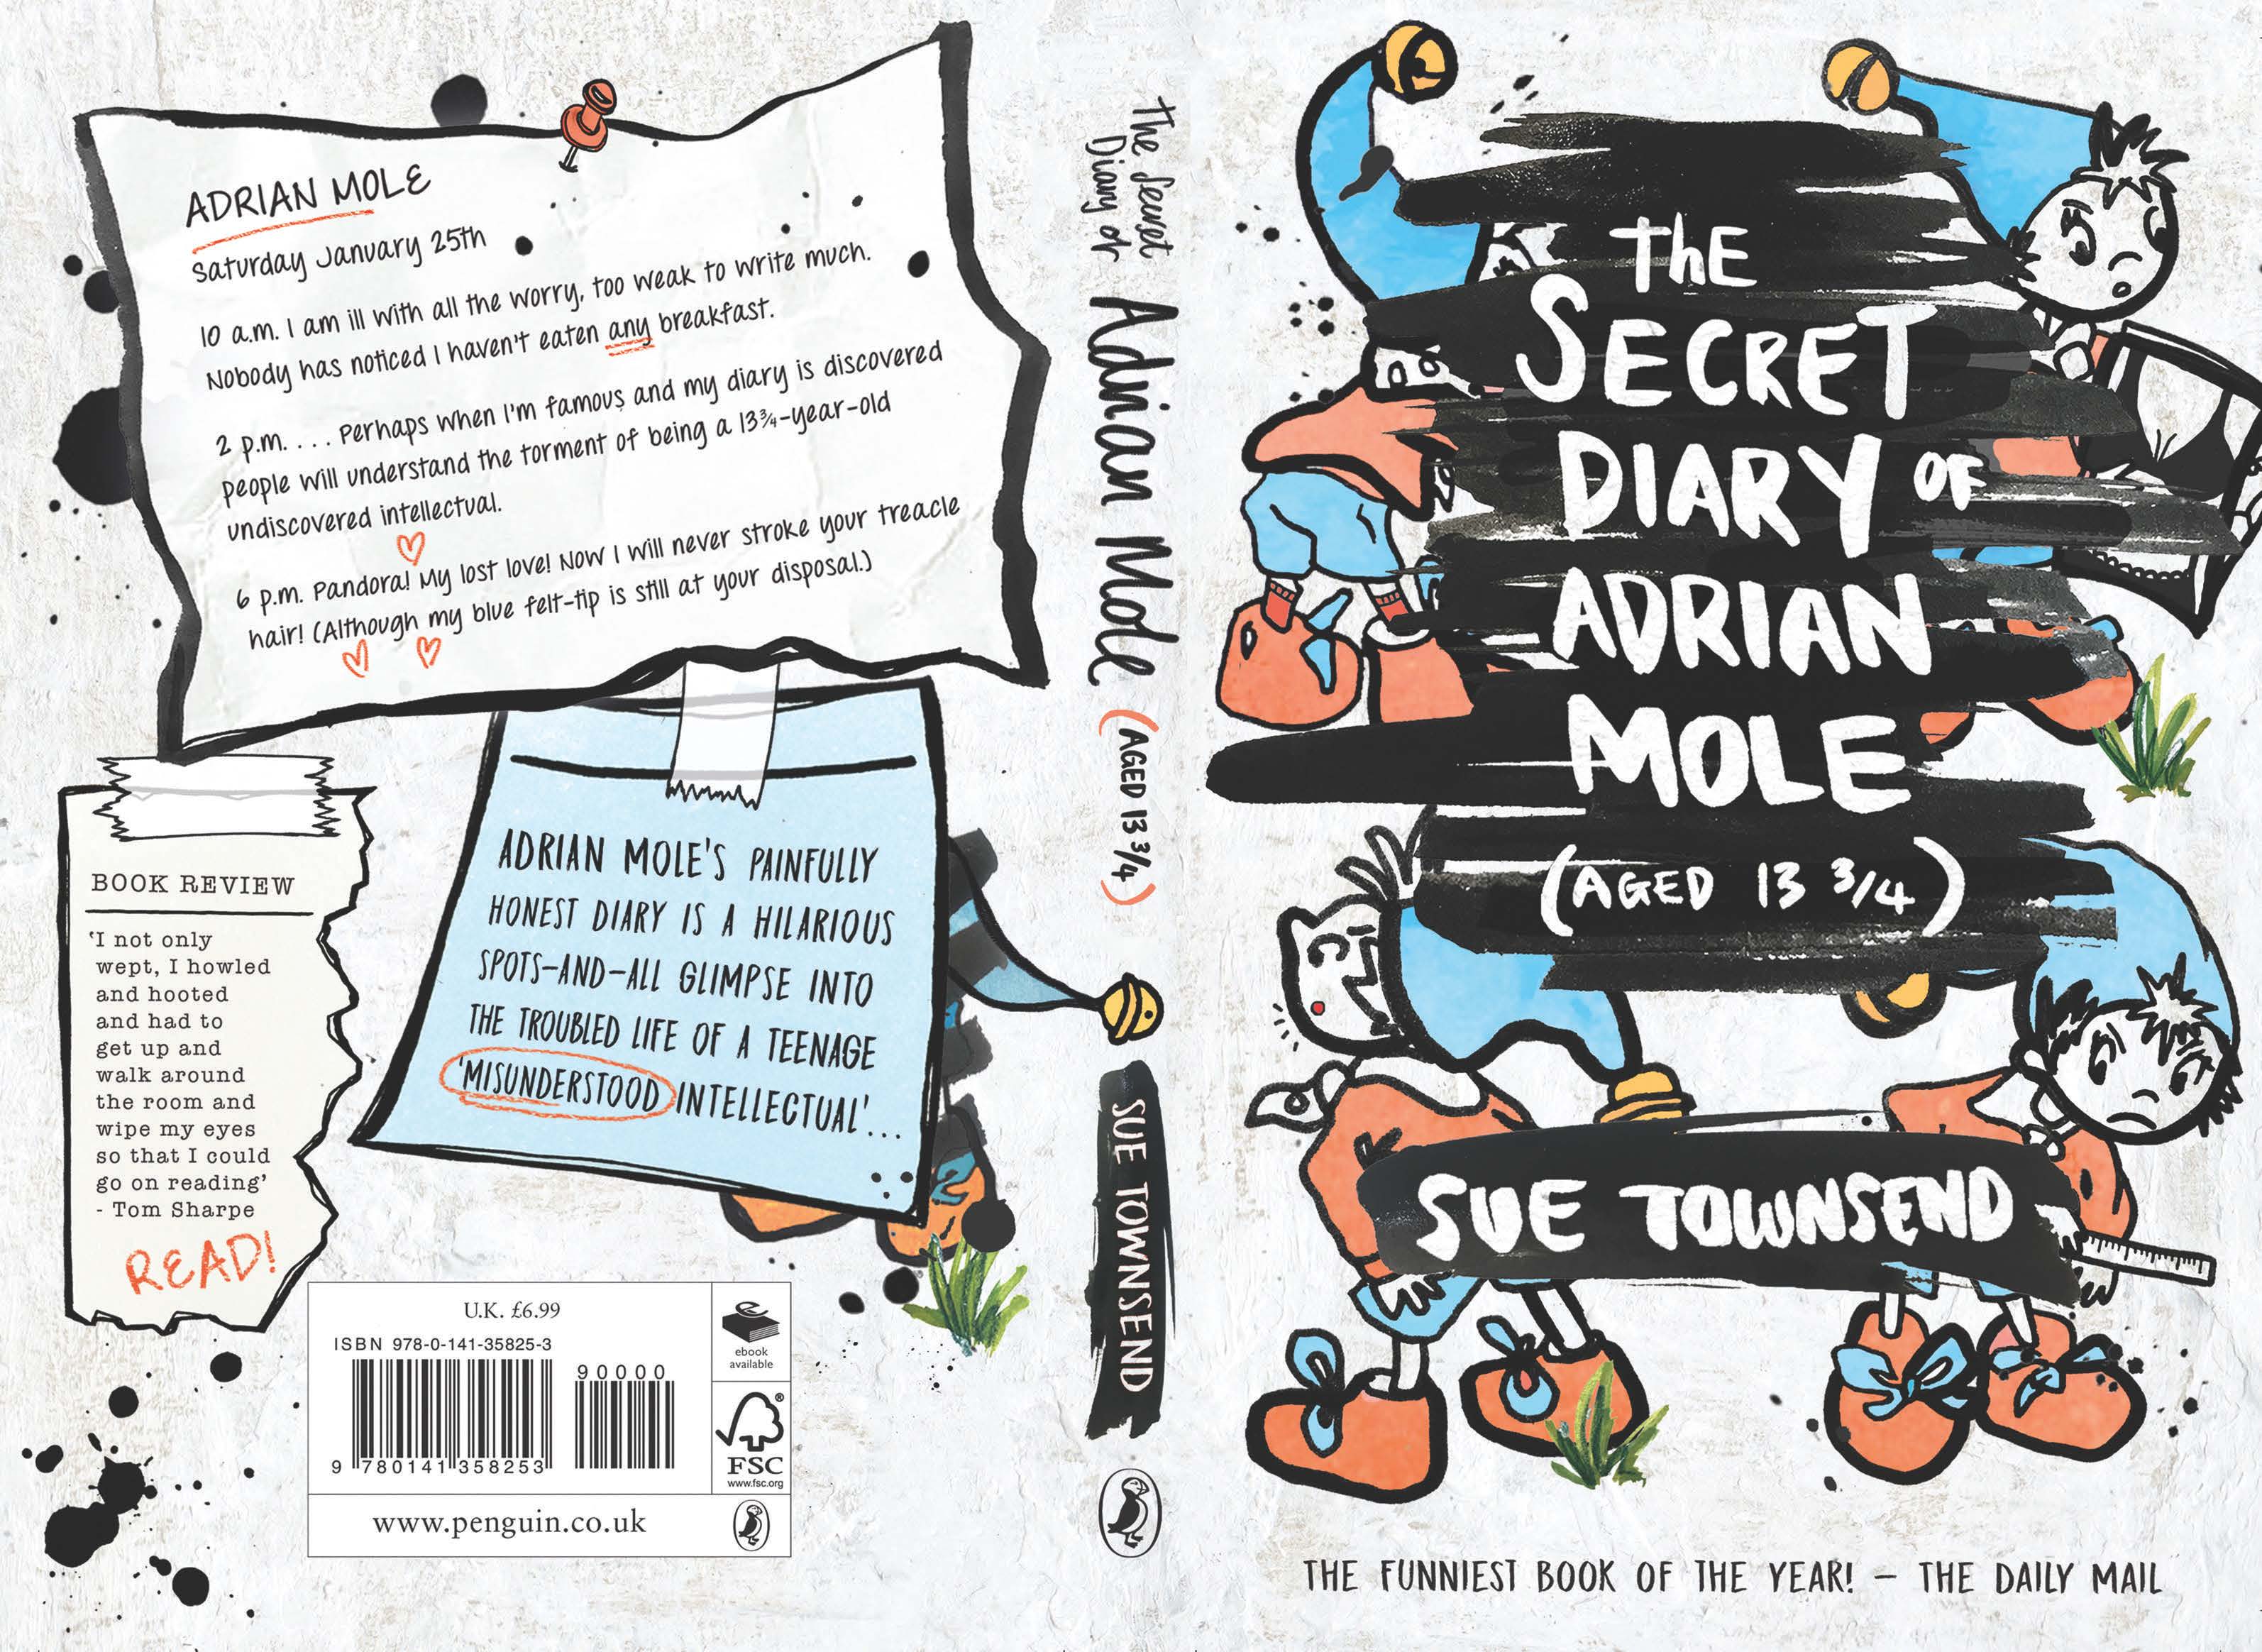 The Secret Diary of Arian Mole book cover design 